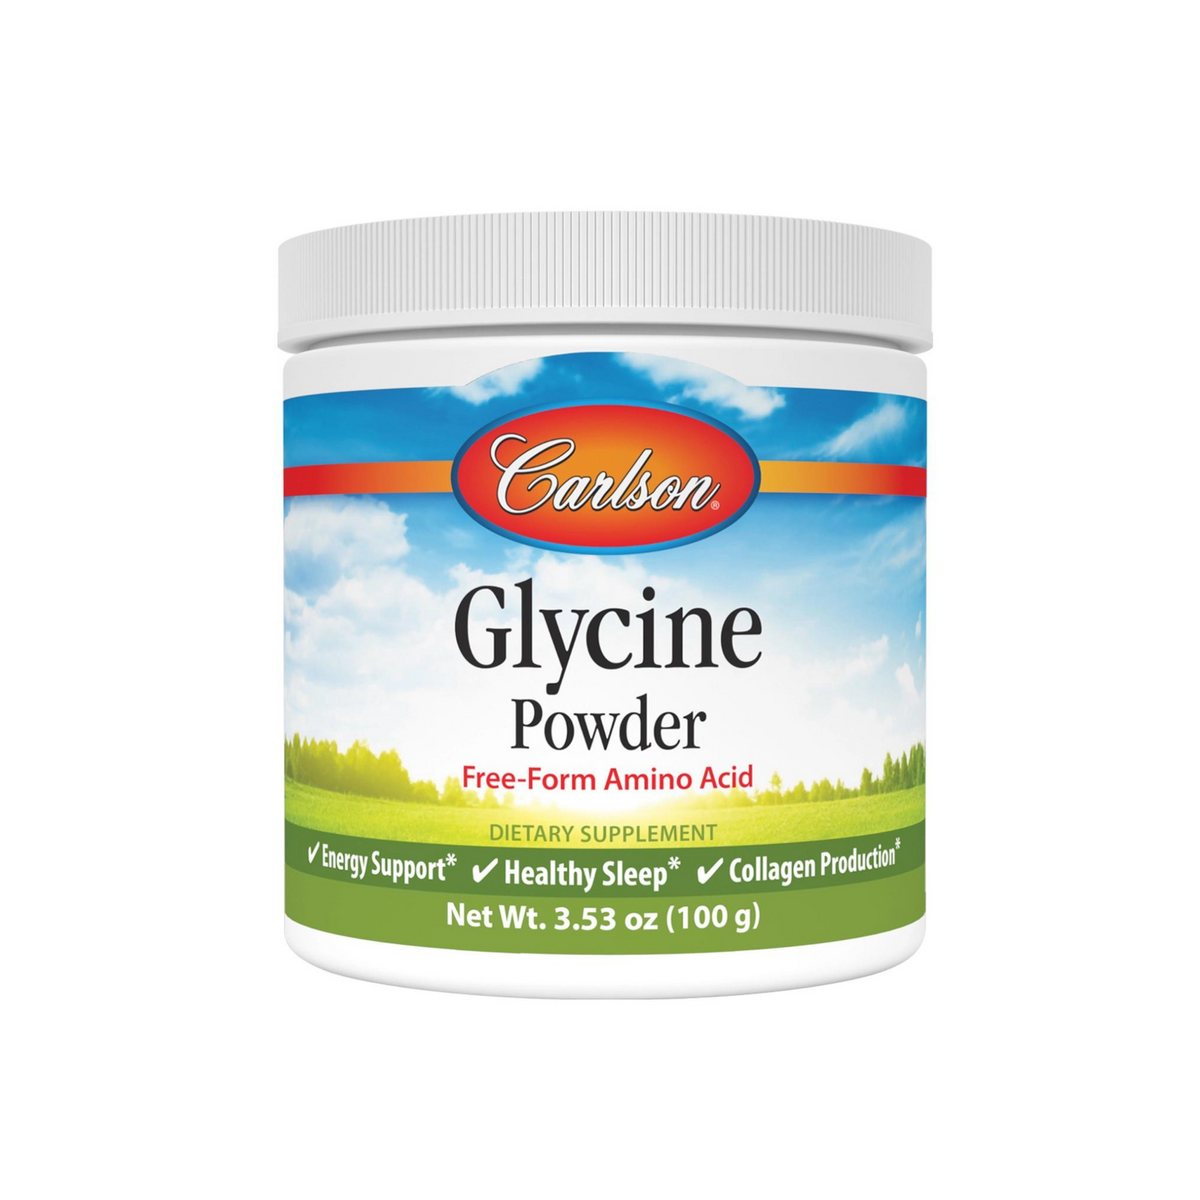 Primary image of L-Glycine Powder